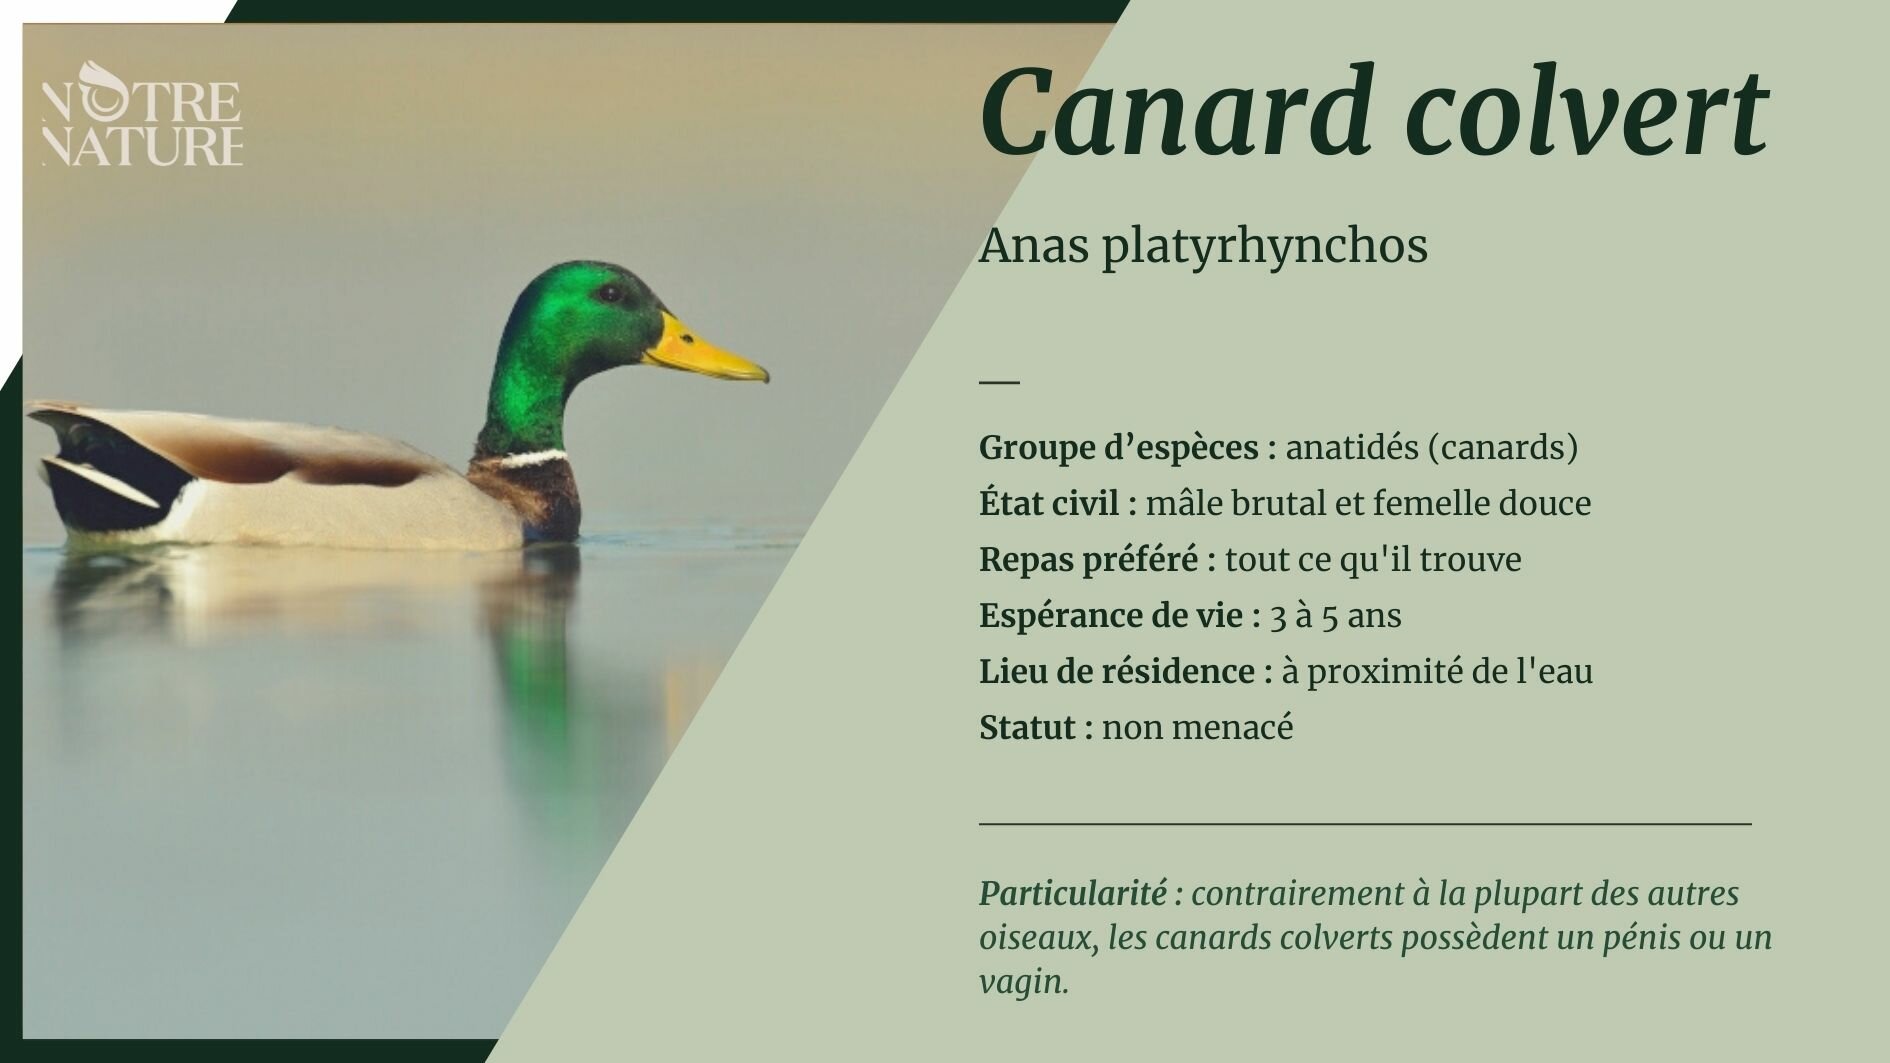 Canard colvert - Notre Nature